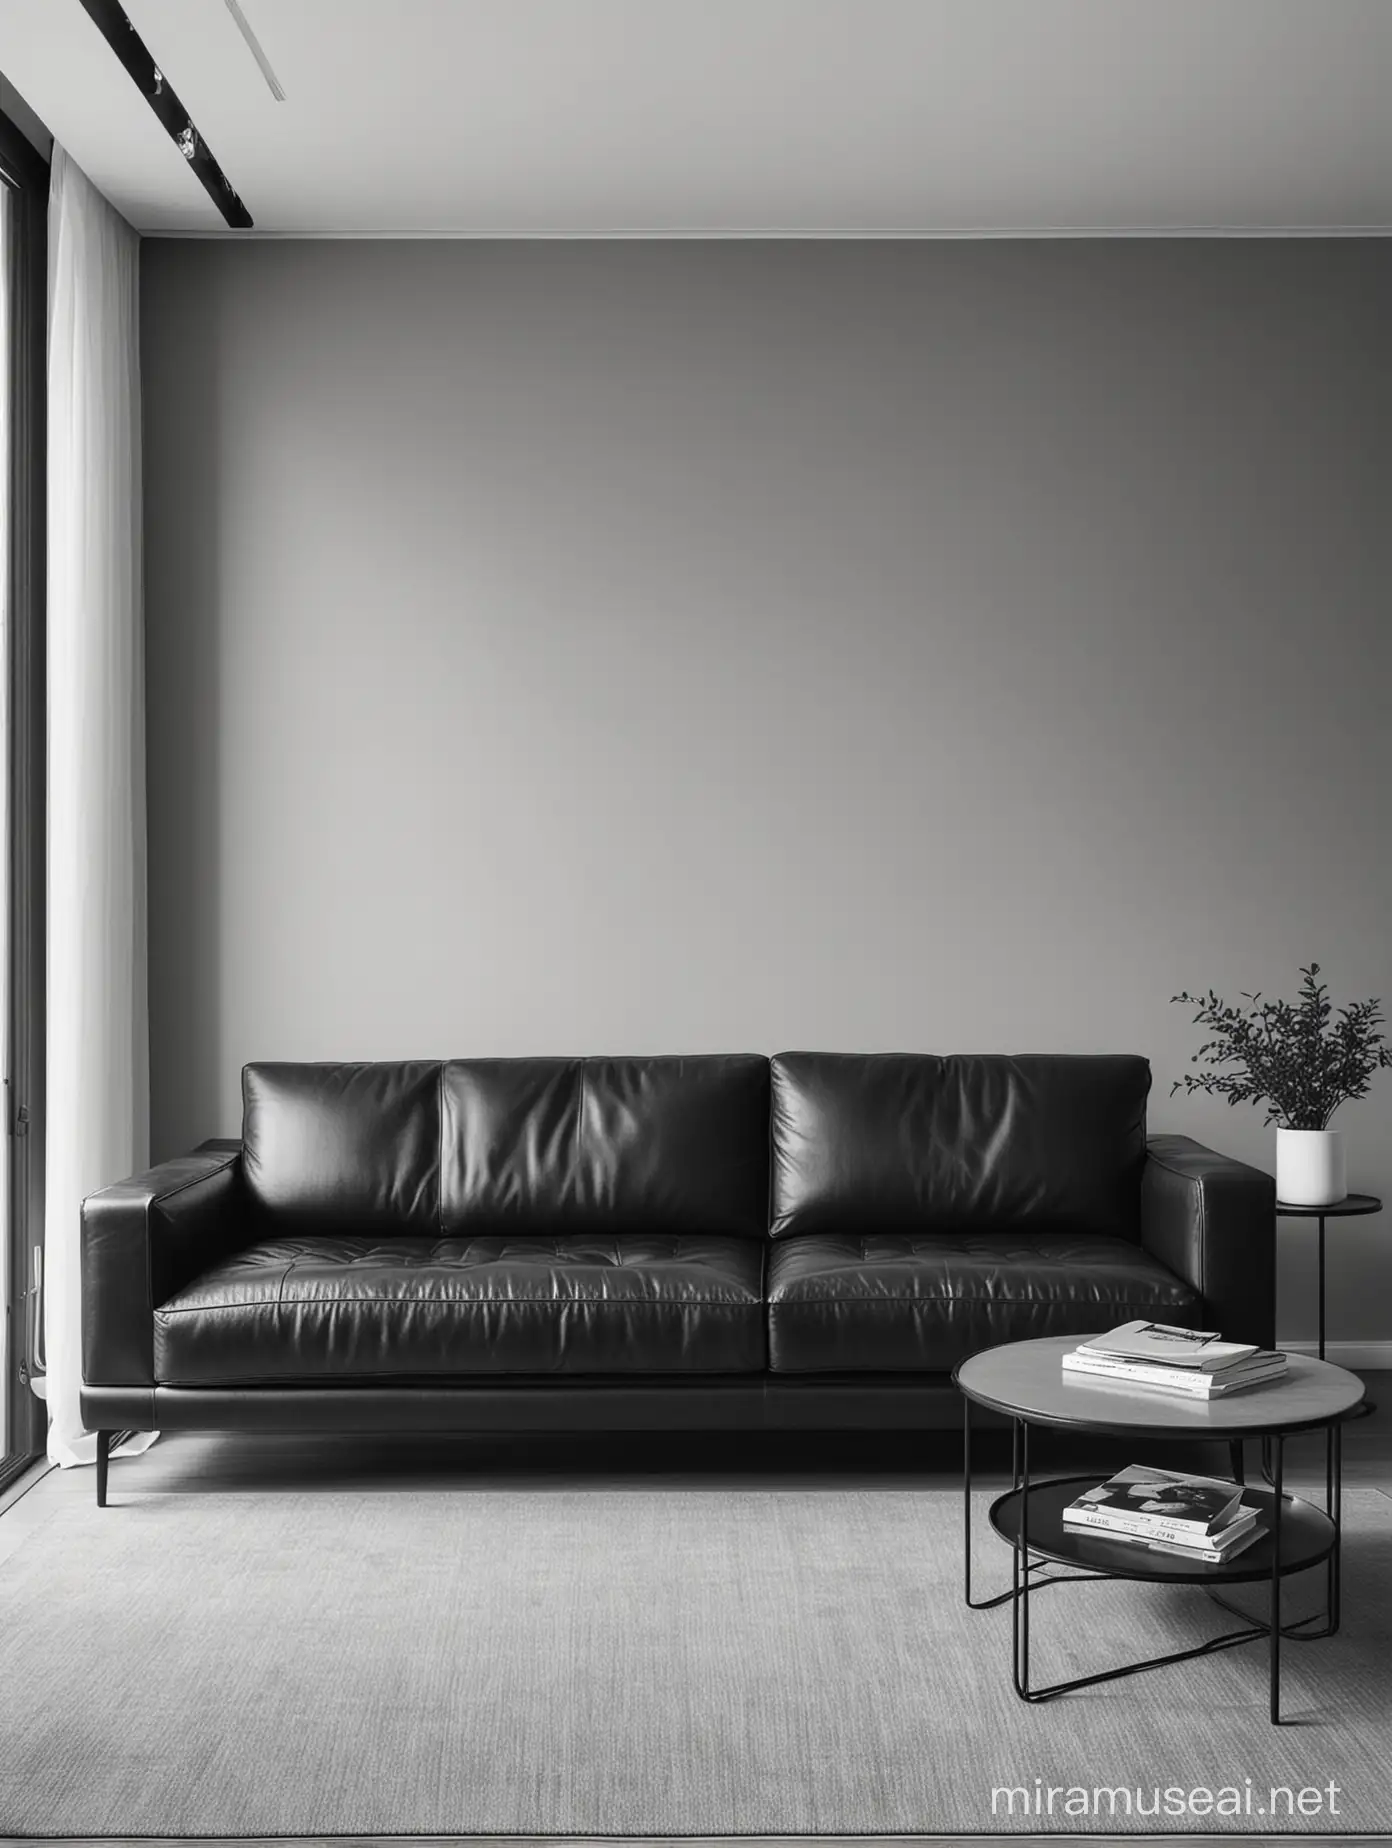 Modern Living Room with Black Leather Sofa in Monochrome Minimalist Interior